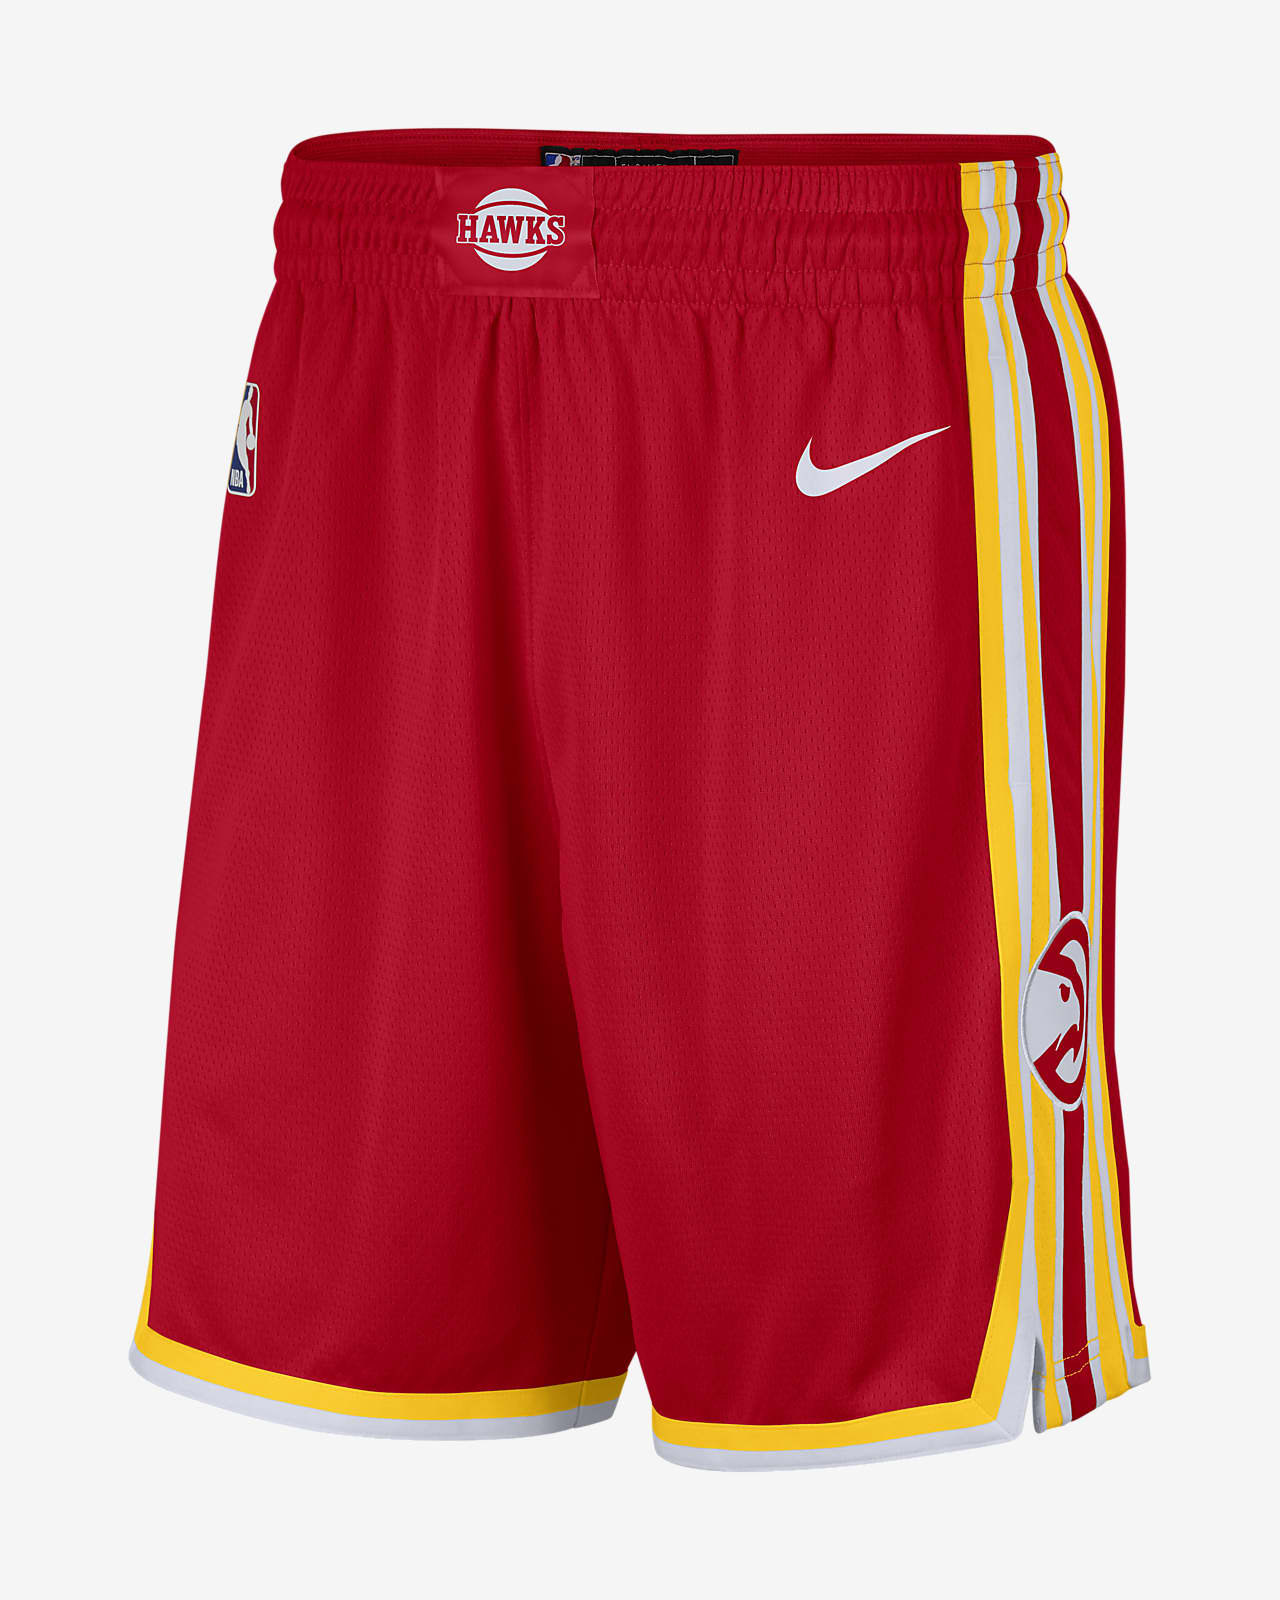 Hawks Icon Edition 2020 Men's Nike NBA Swingman Shorts